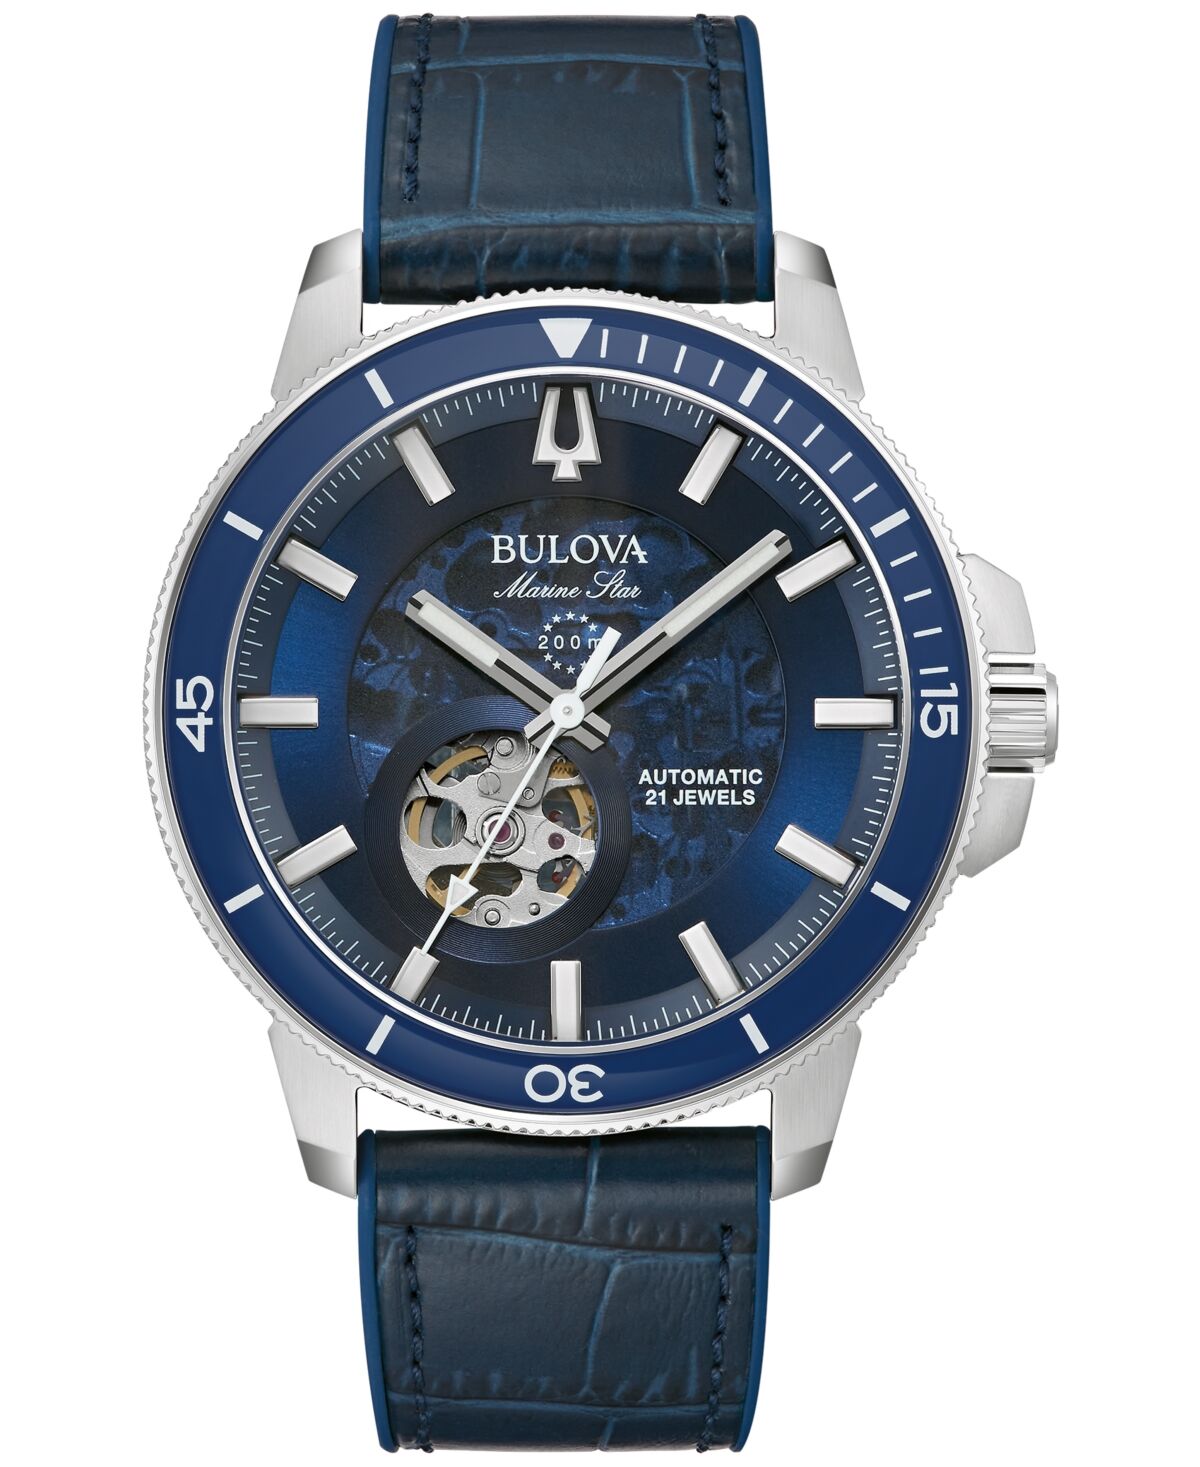 Bulova Men's Automatic Marine Star Series C Blue Leather Strap Watch 45mm - Blue